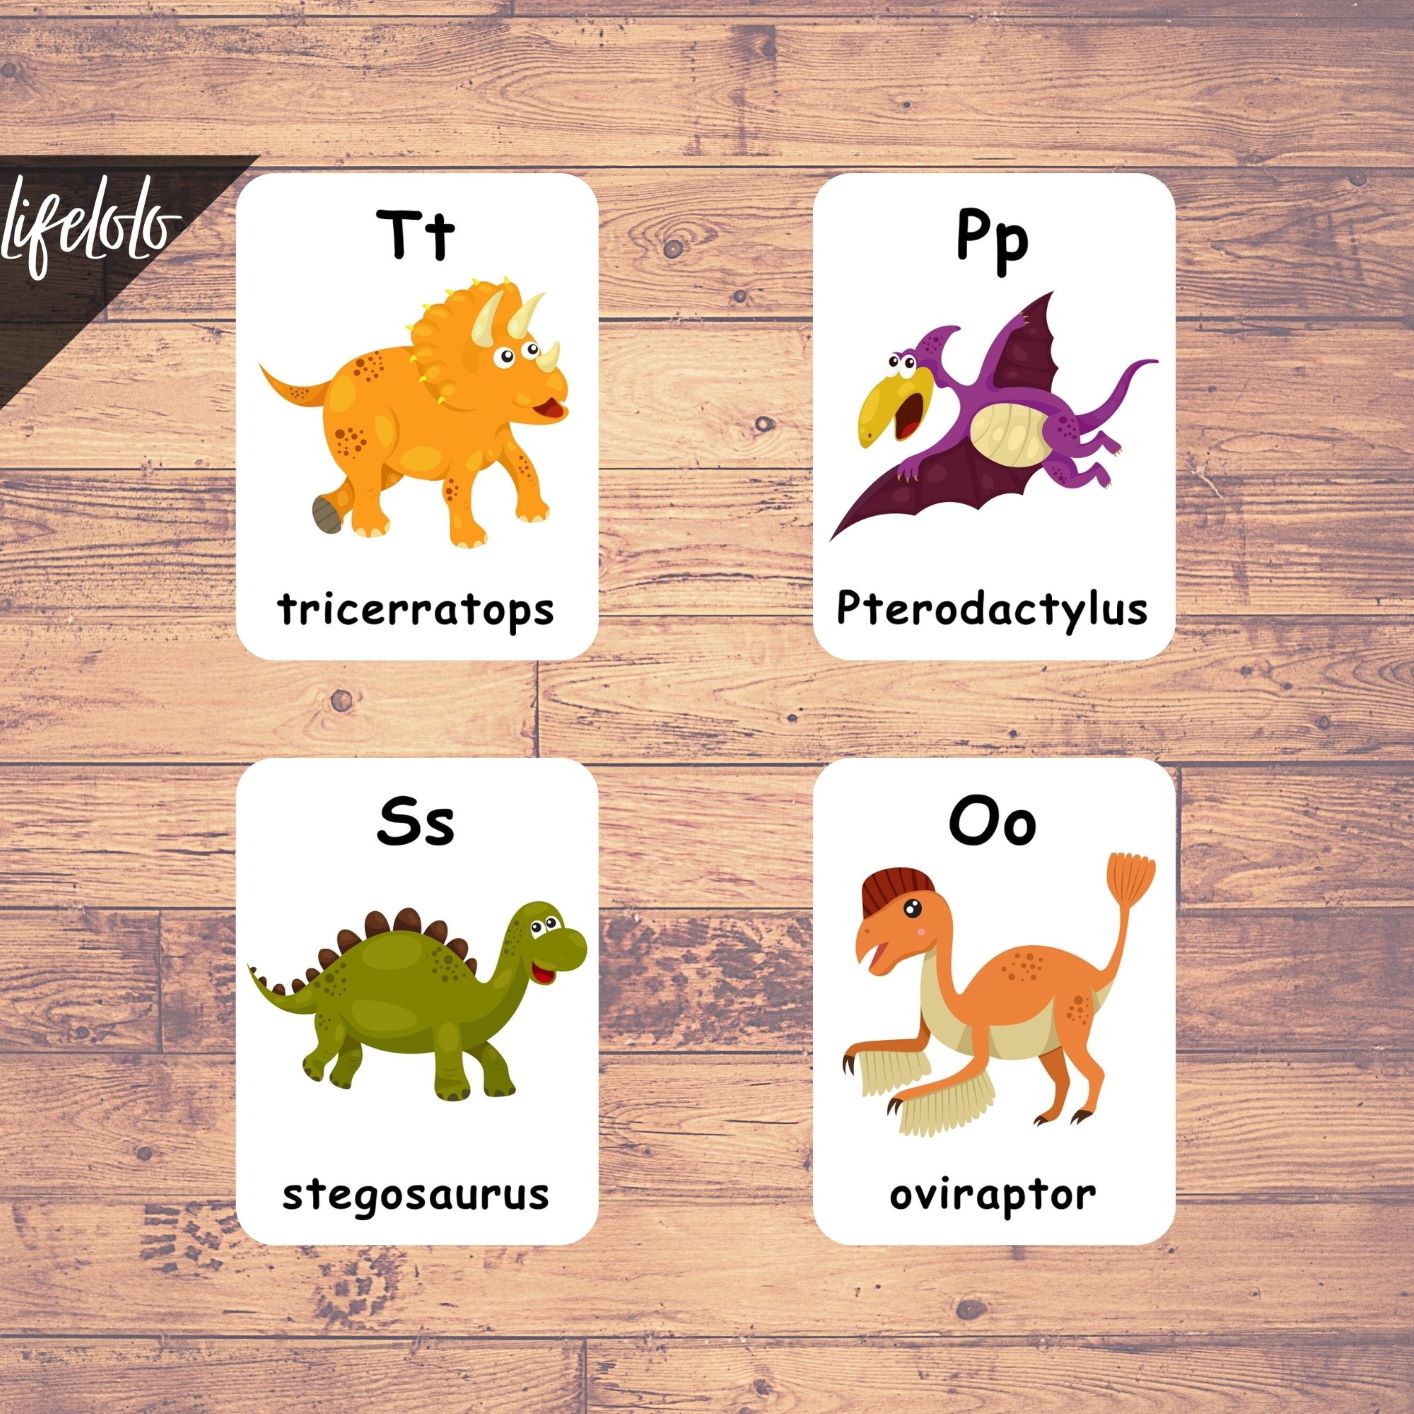 dinosaur-alphabets-26-flash-cards-homeschool-montessori-english-alphabets-download